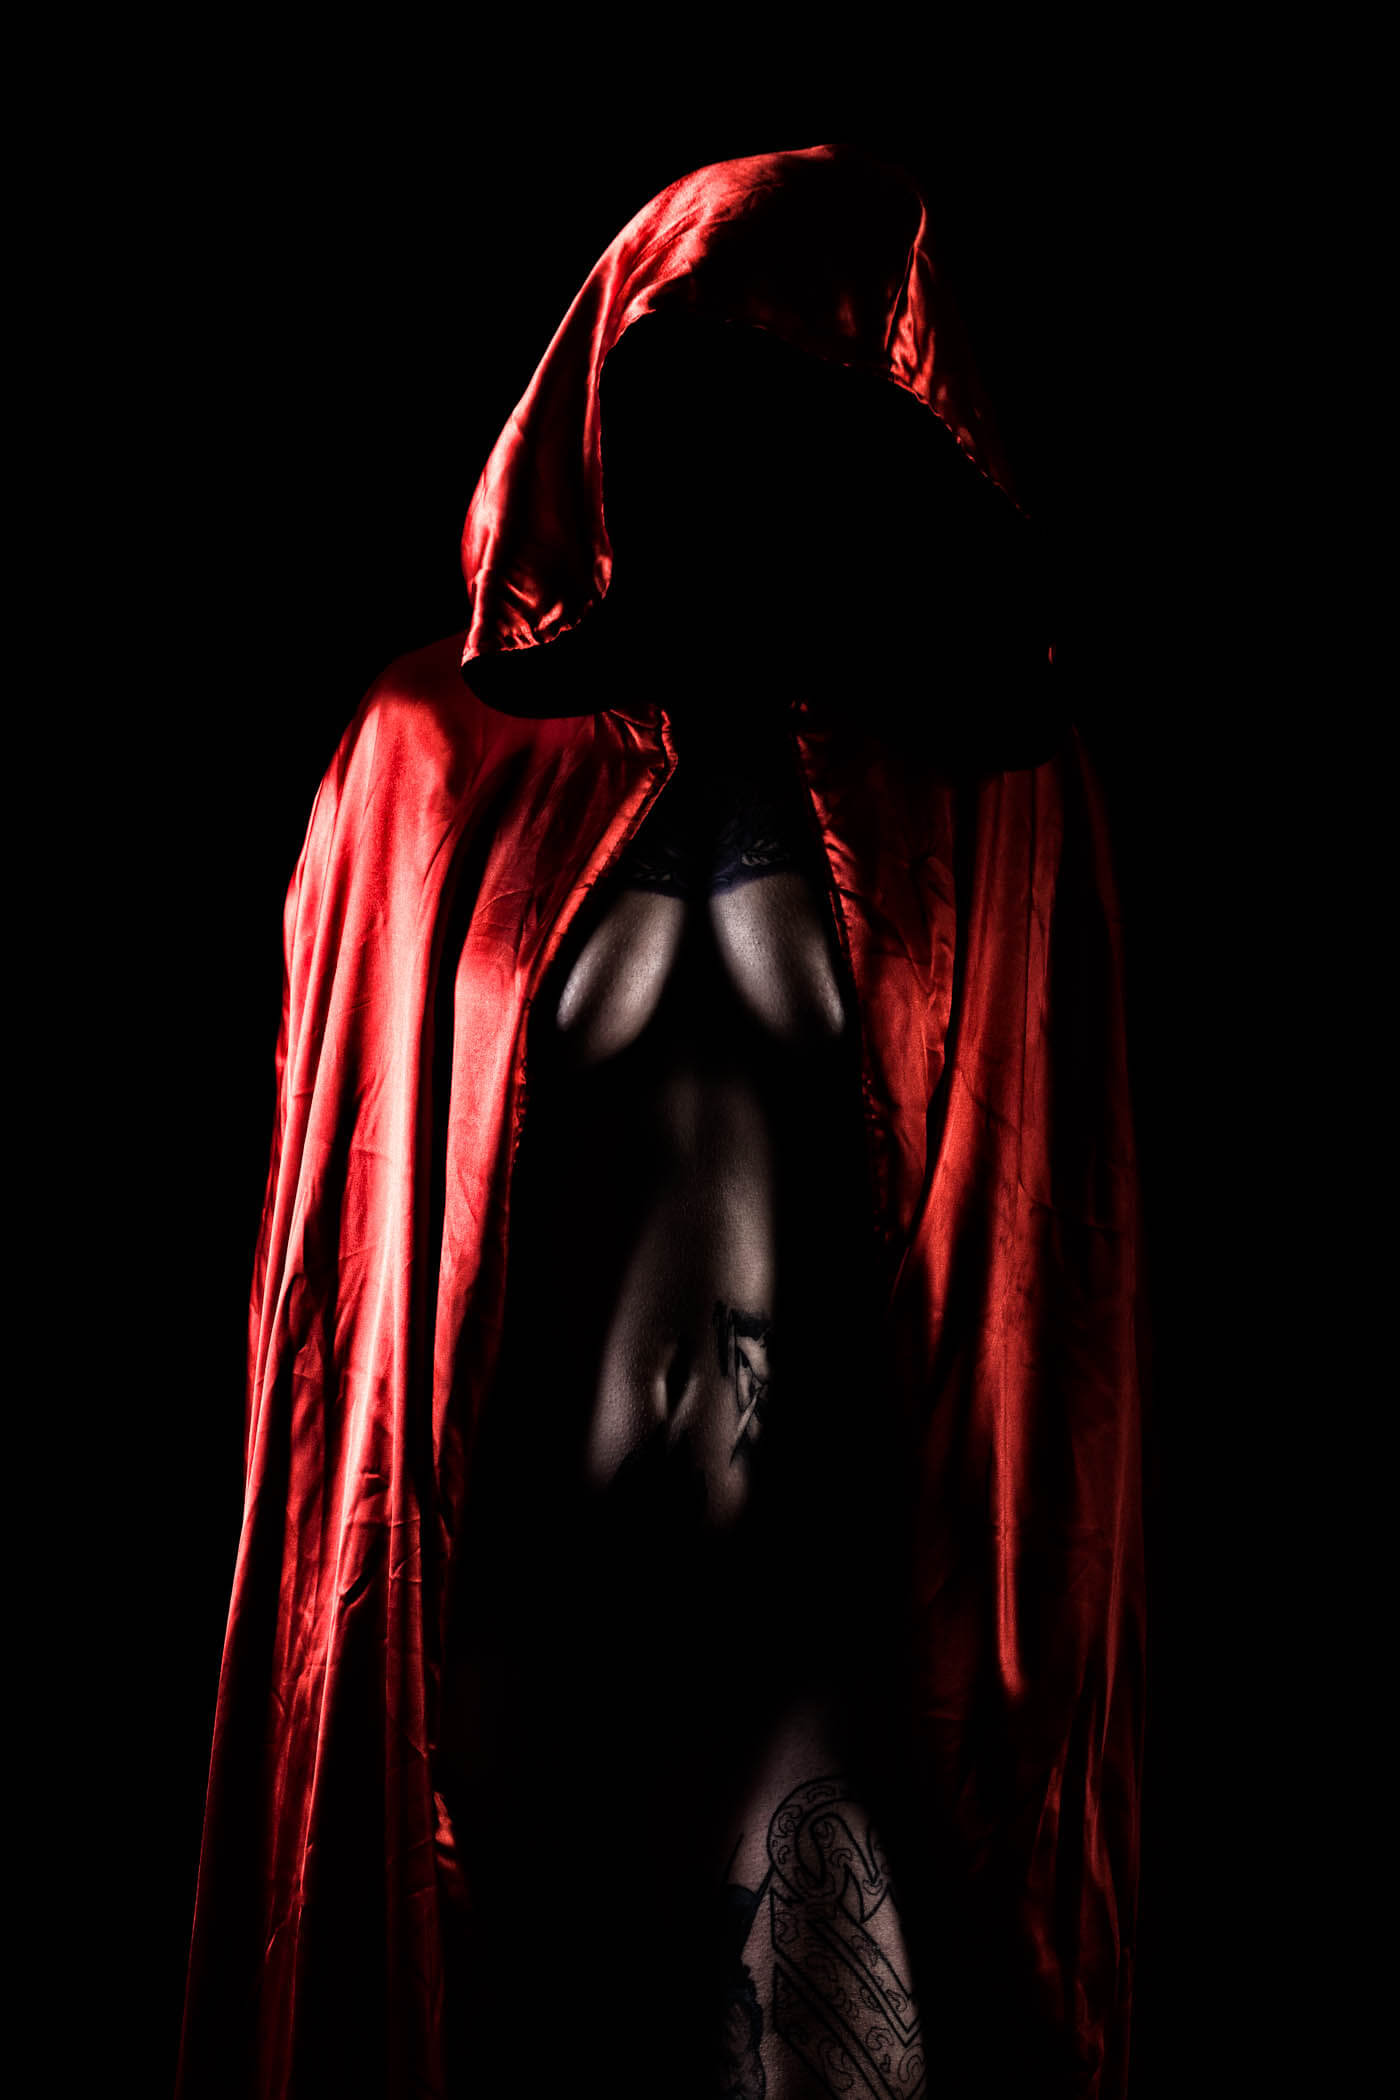 Hannah Batgirl as the red specter